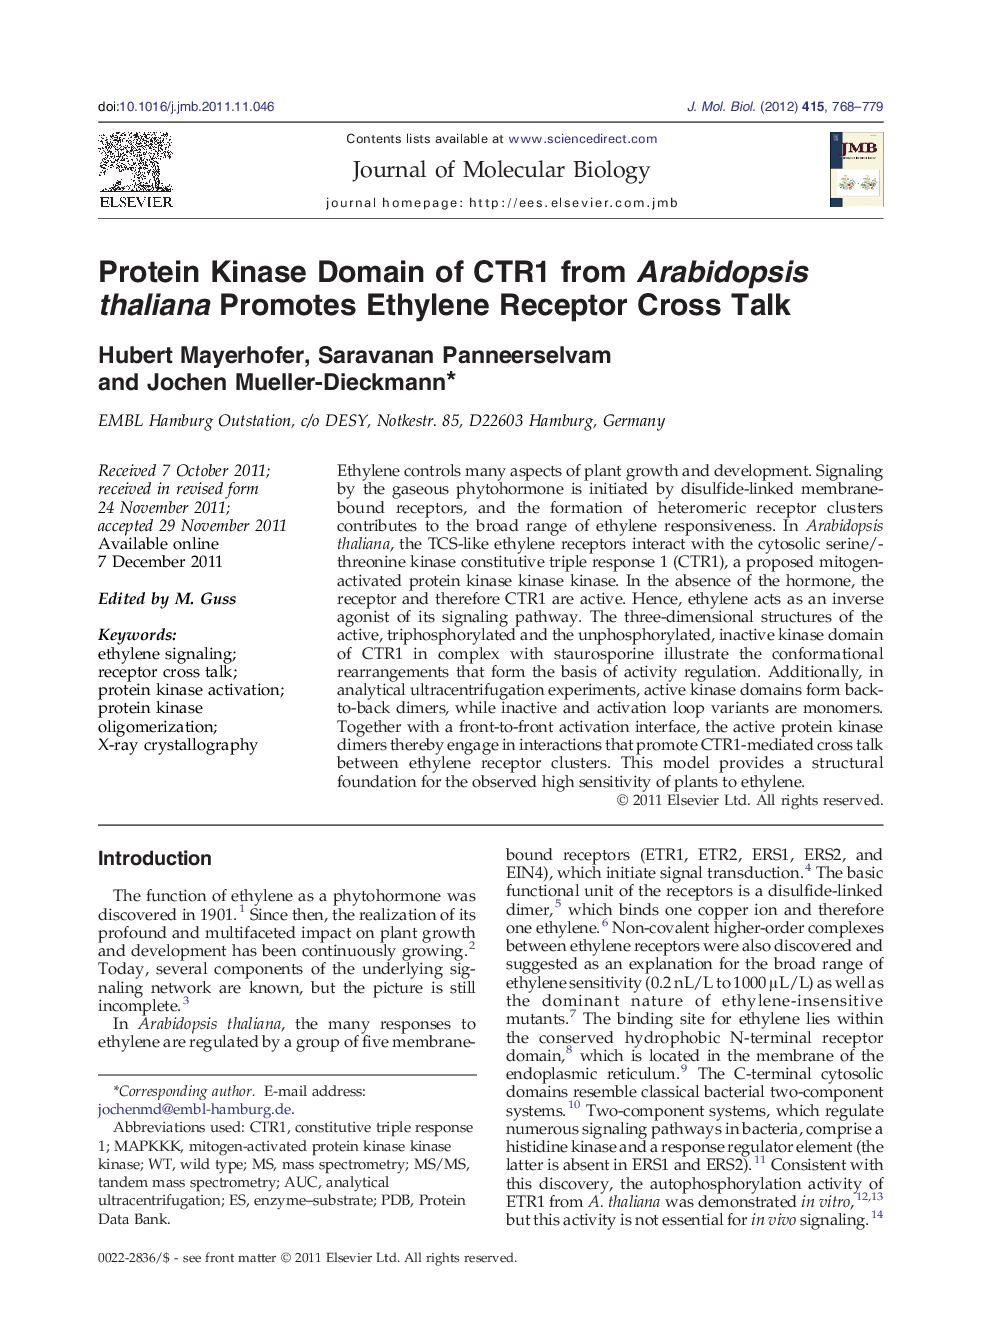 Protein Kinase Domain of CTR1 from Arabidopsis thaliana Promotes Ethylene Receptor Cross Talk